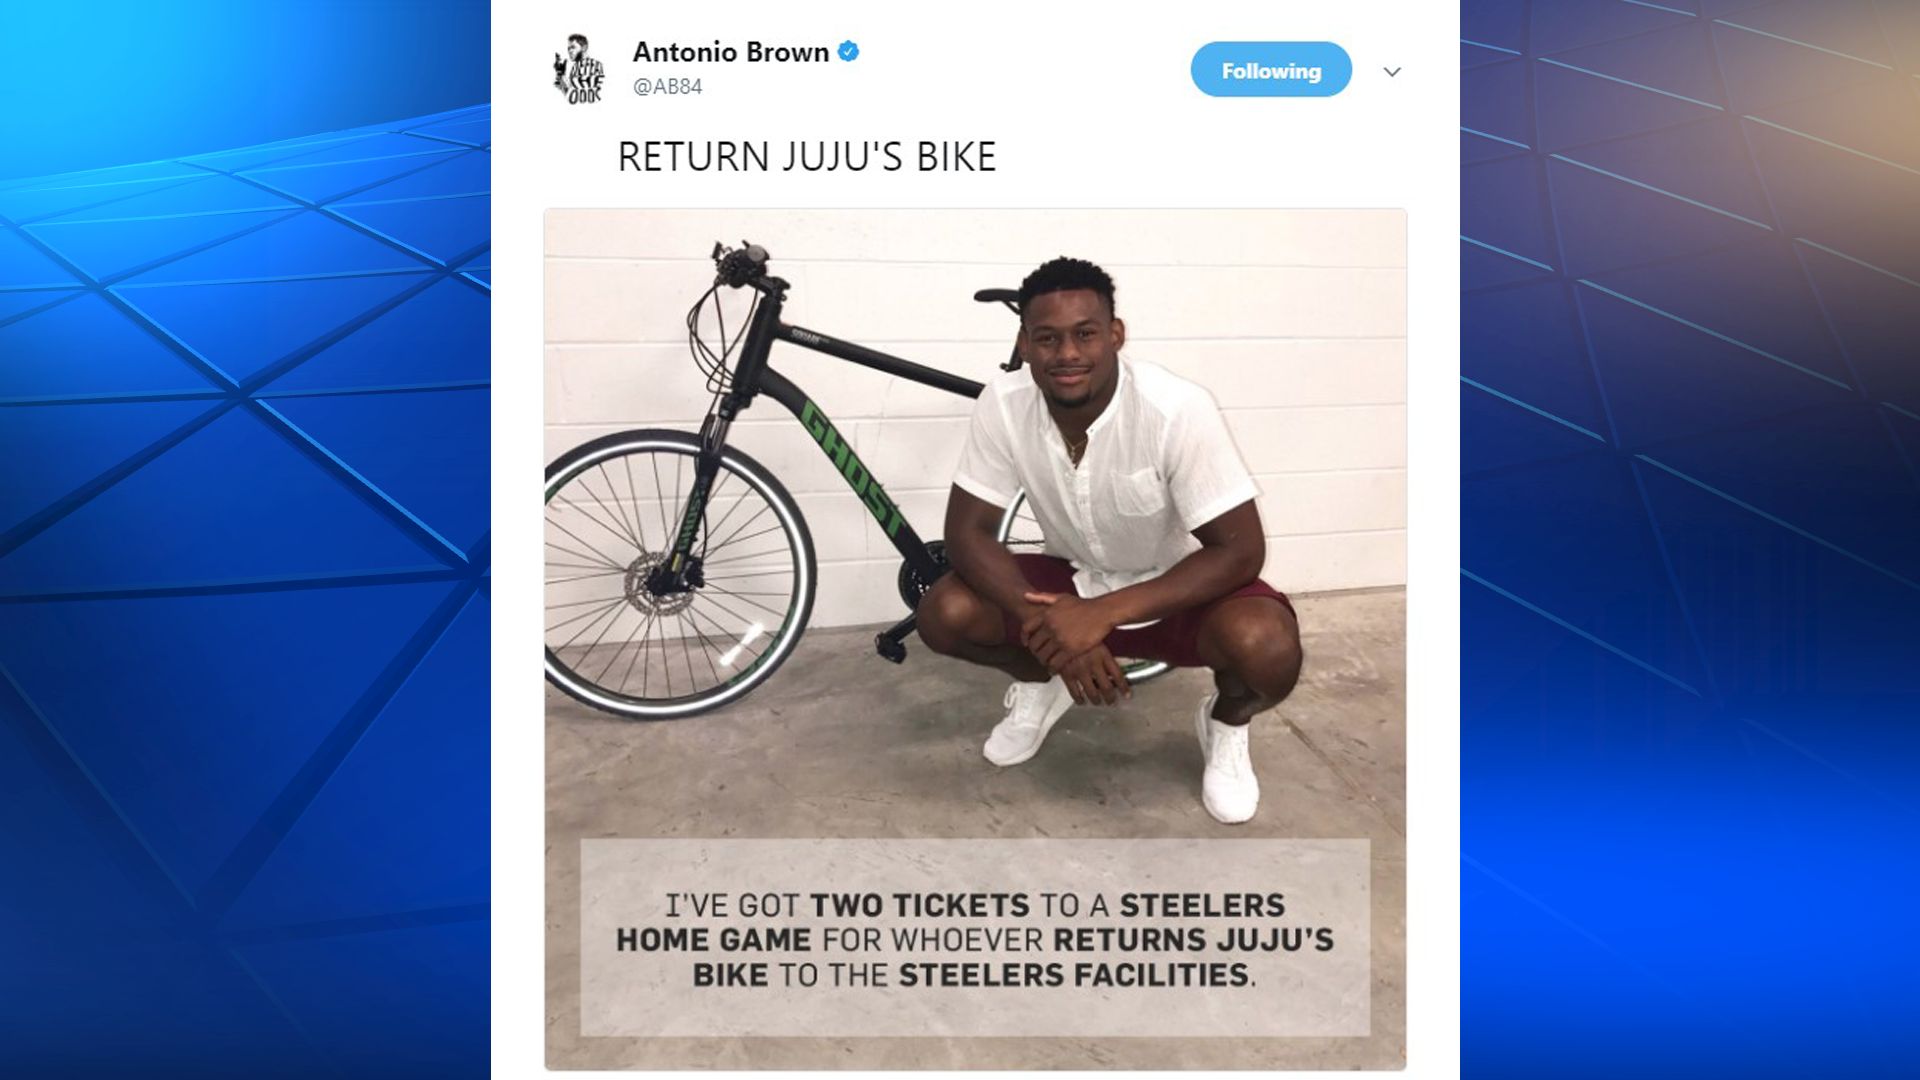 JuJu Smith-Schuster's bike stolen, Antonio Brown offering Steelers tickets to whoever returns it